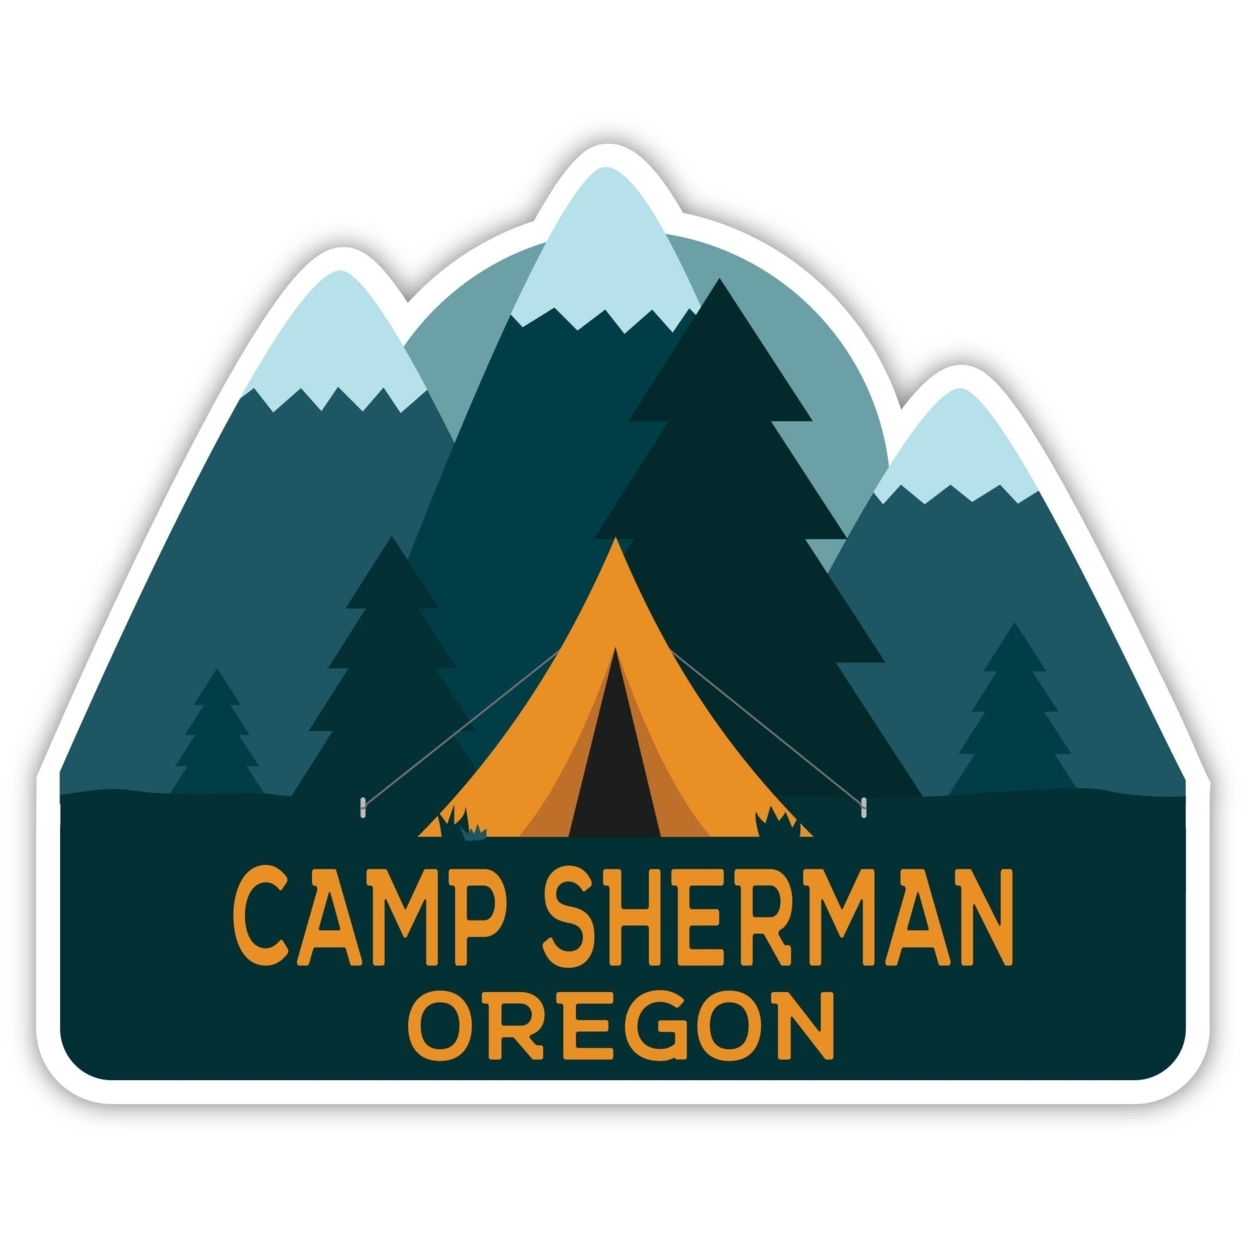 Camp Sherman Oregon Souvenir Decorative Stickers (Choose Theme And Size) - 4-Pack, 2-Inch, Tent